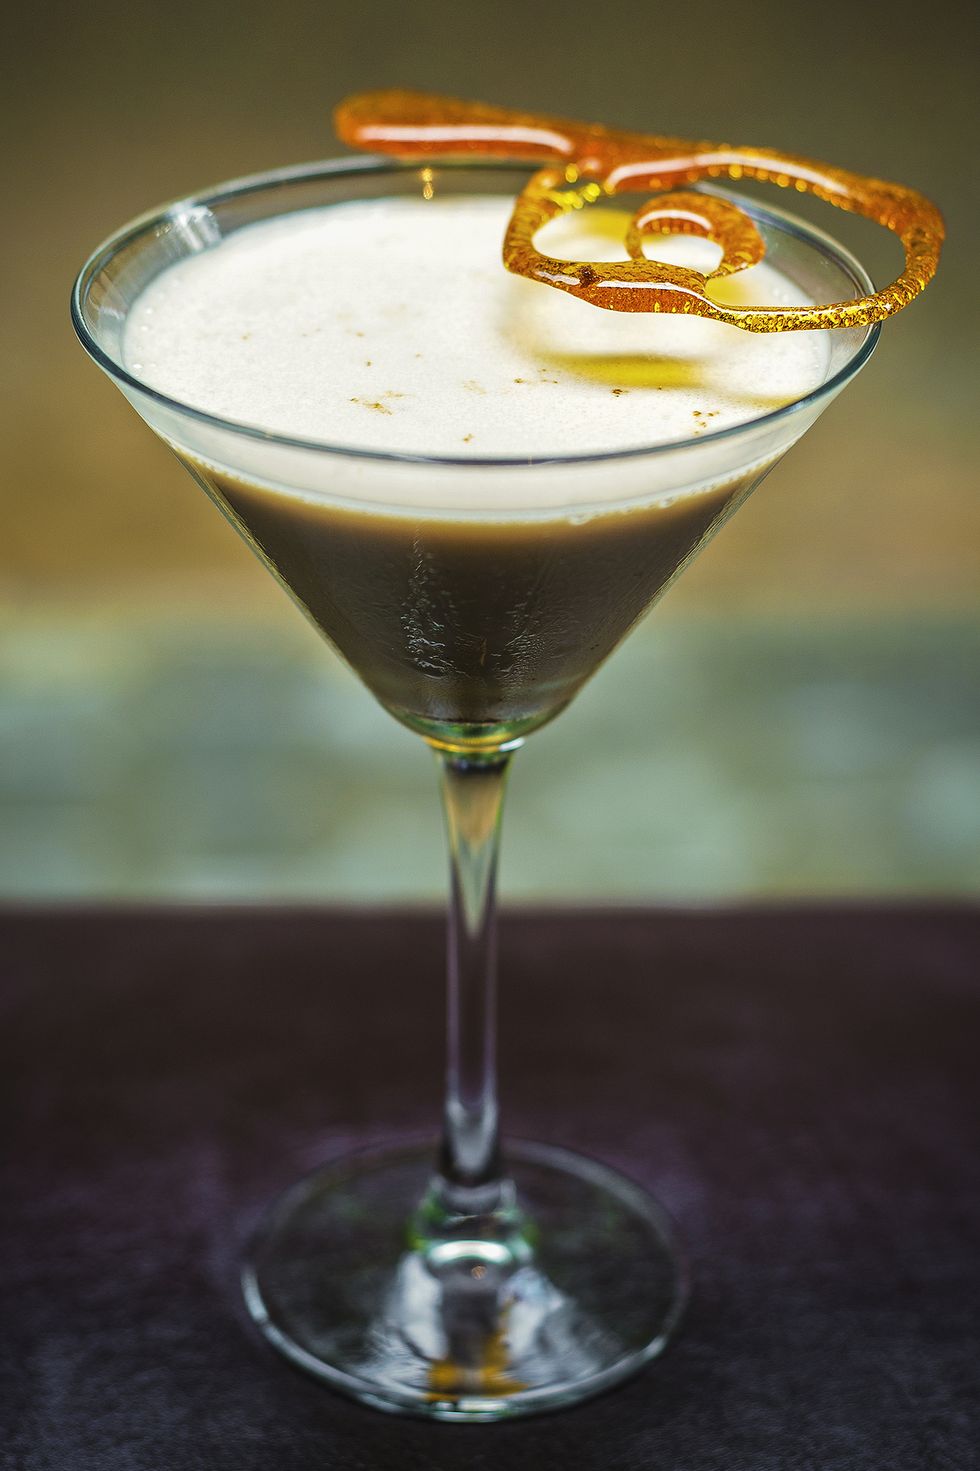 creme caramel cream martini cocktail drink glass  on bar